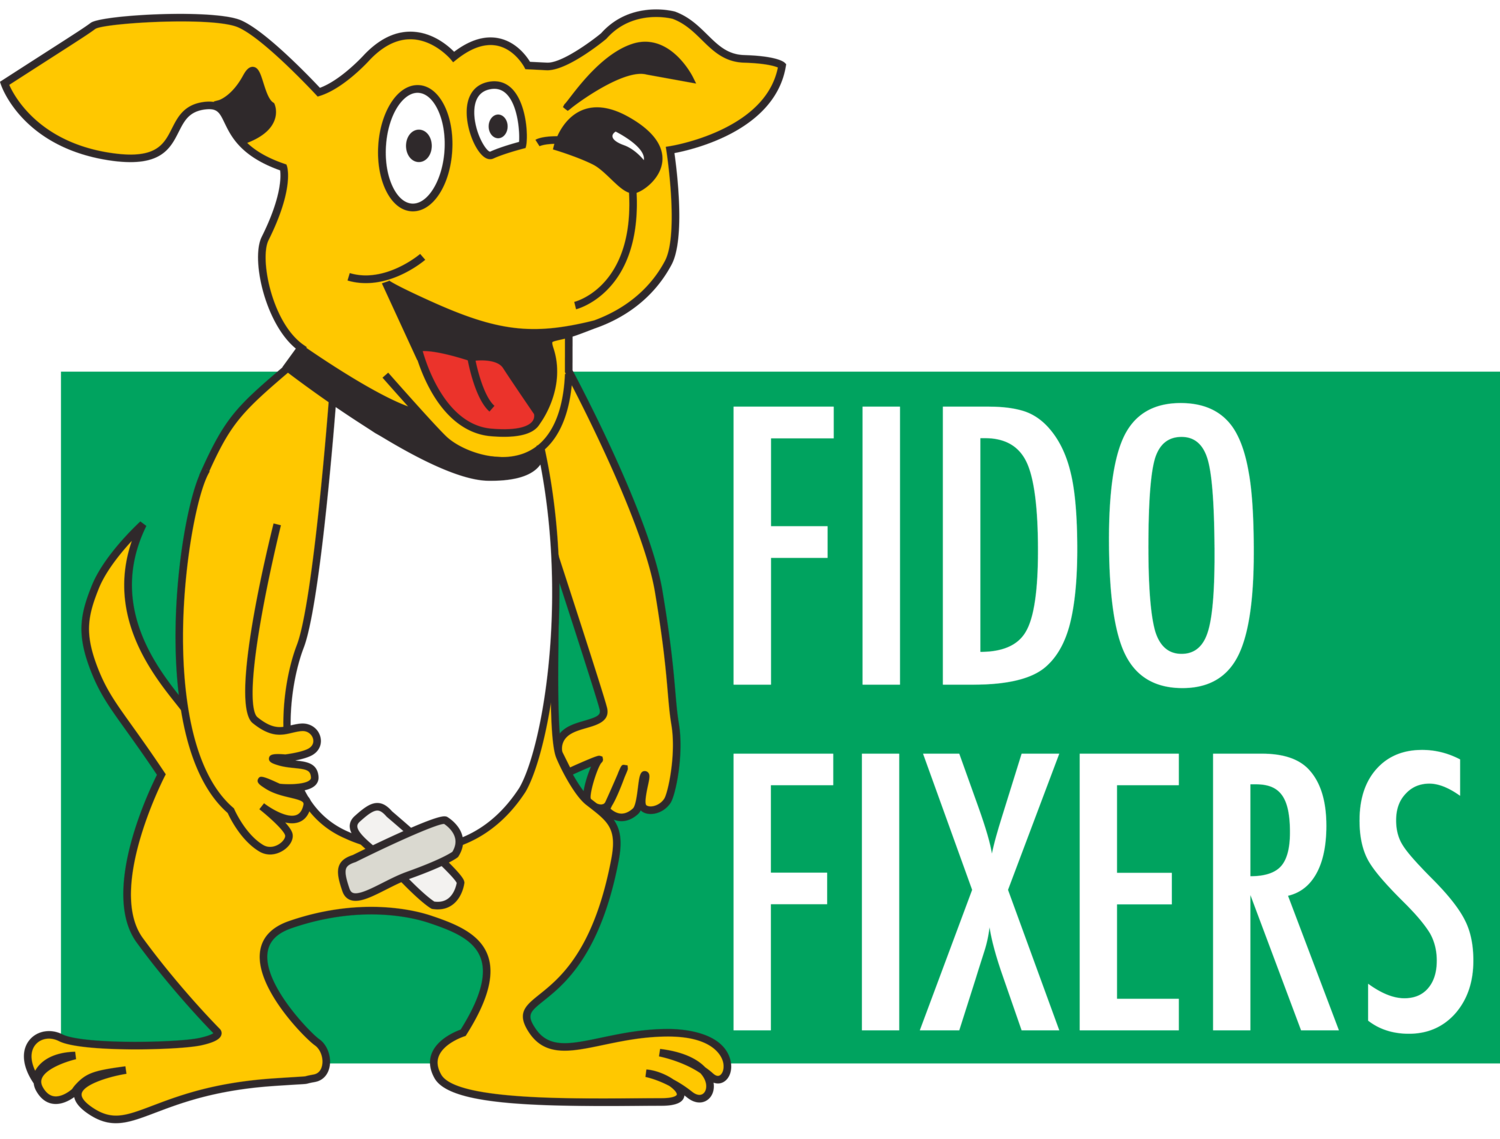 FidoFixer stacked